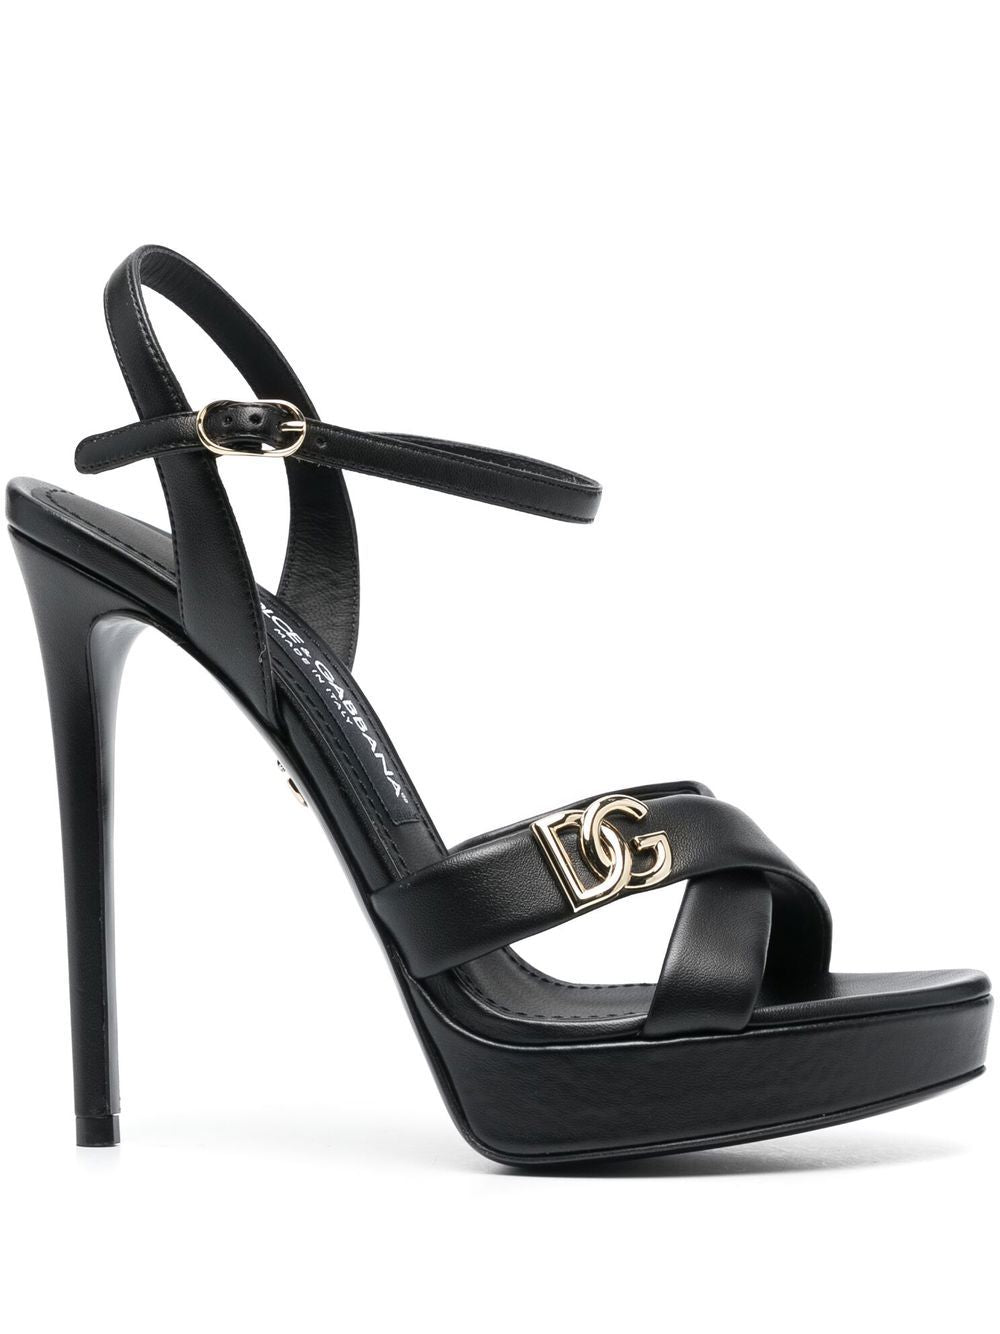 Dolce & Gabbana, 130mm Leather Stiletto Sandals